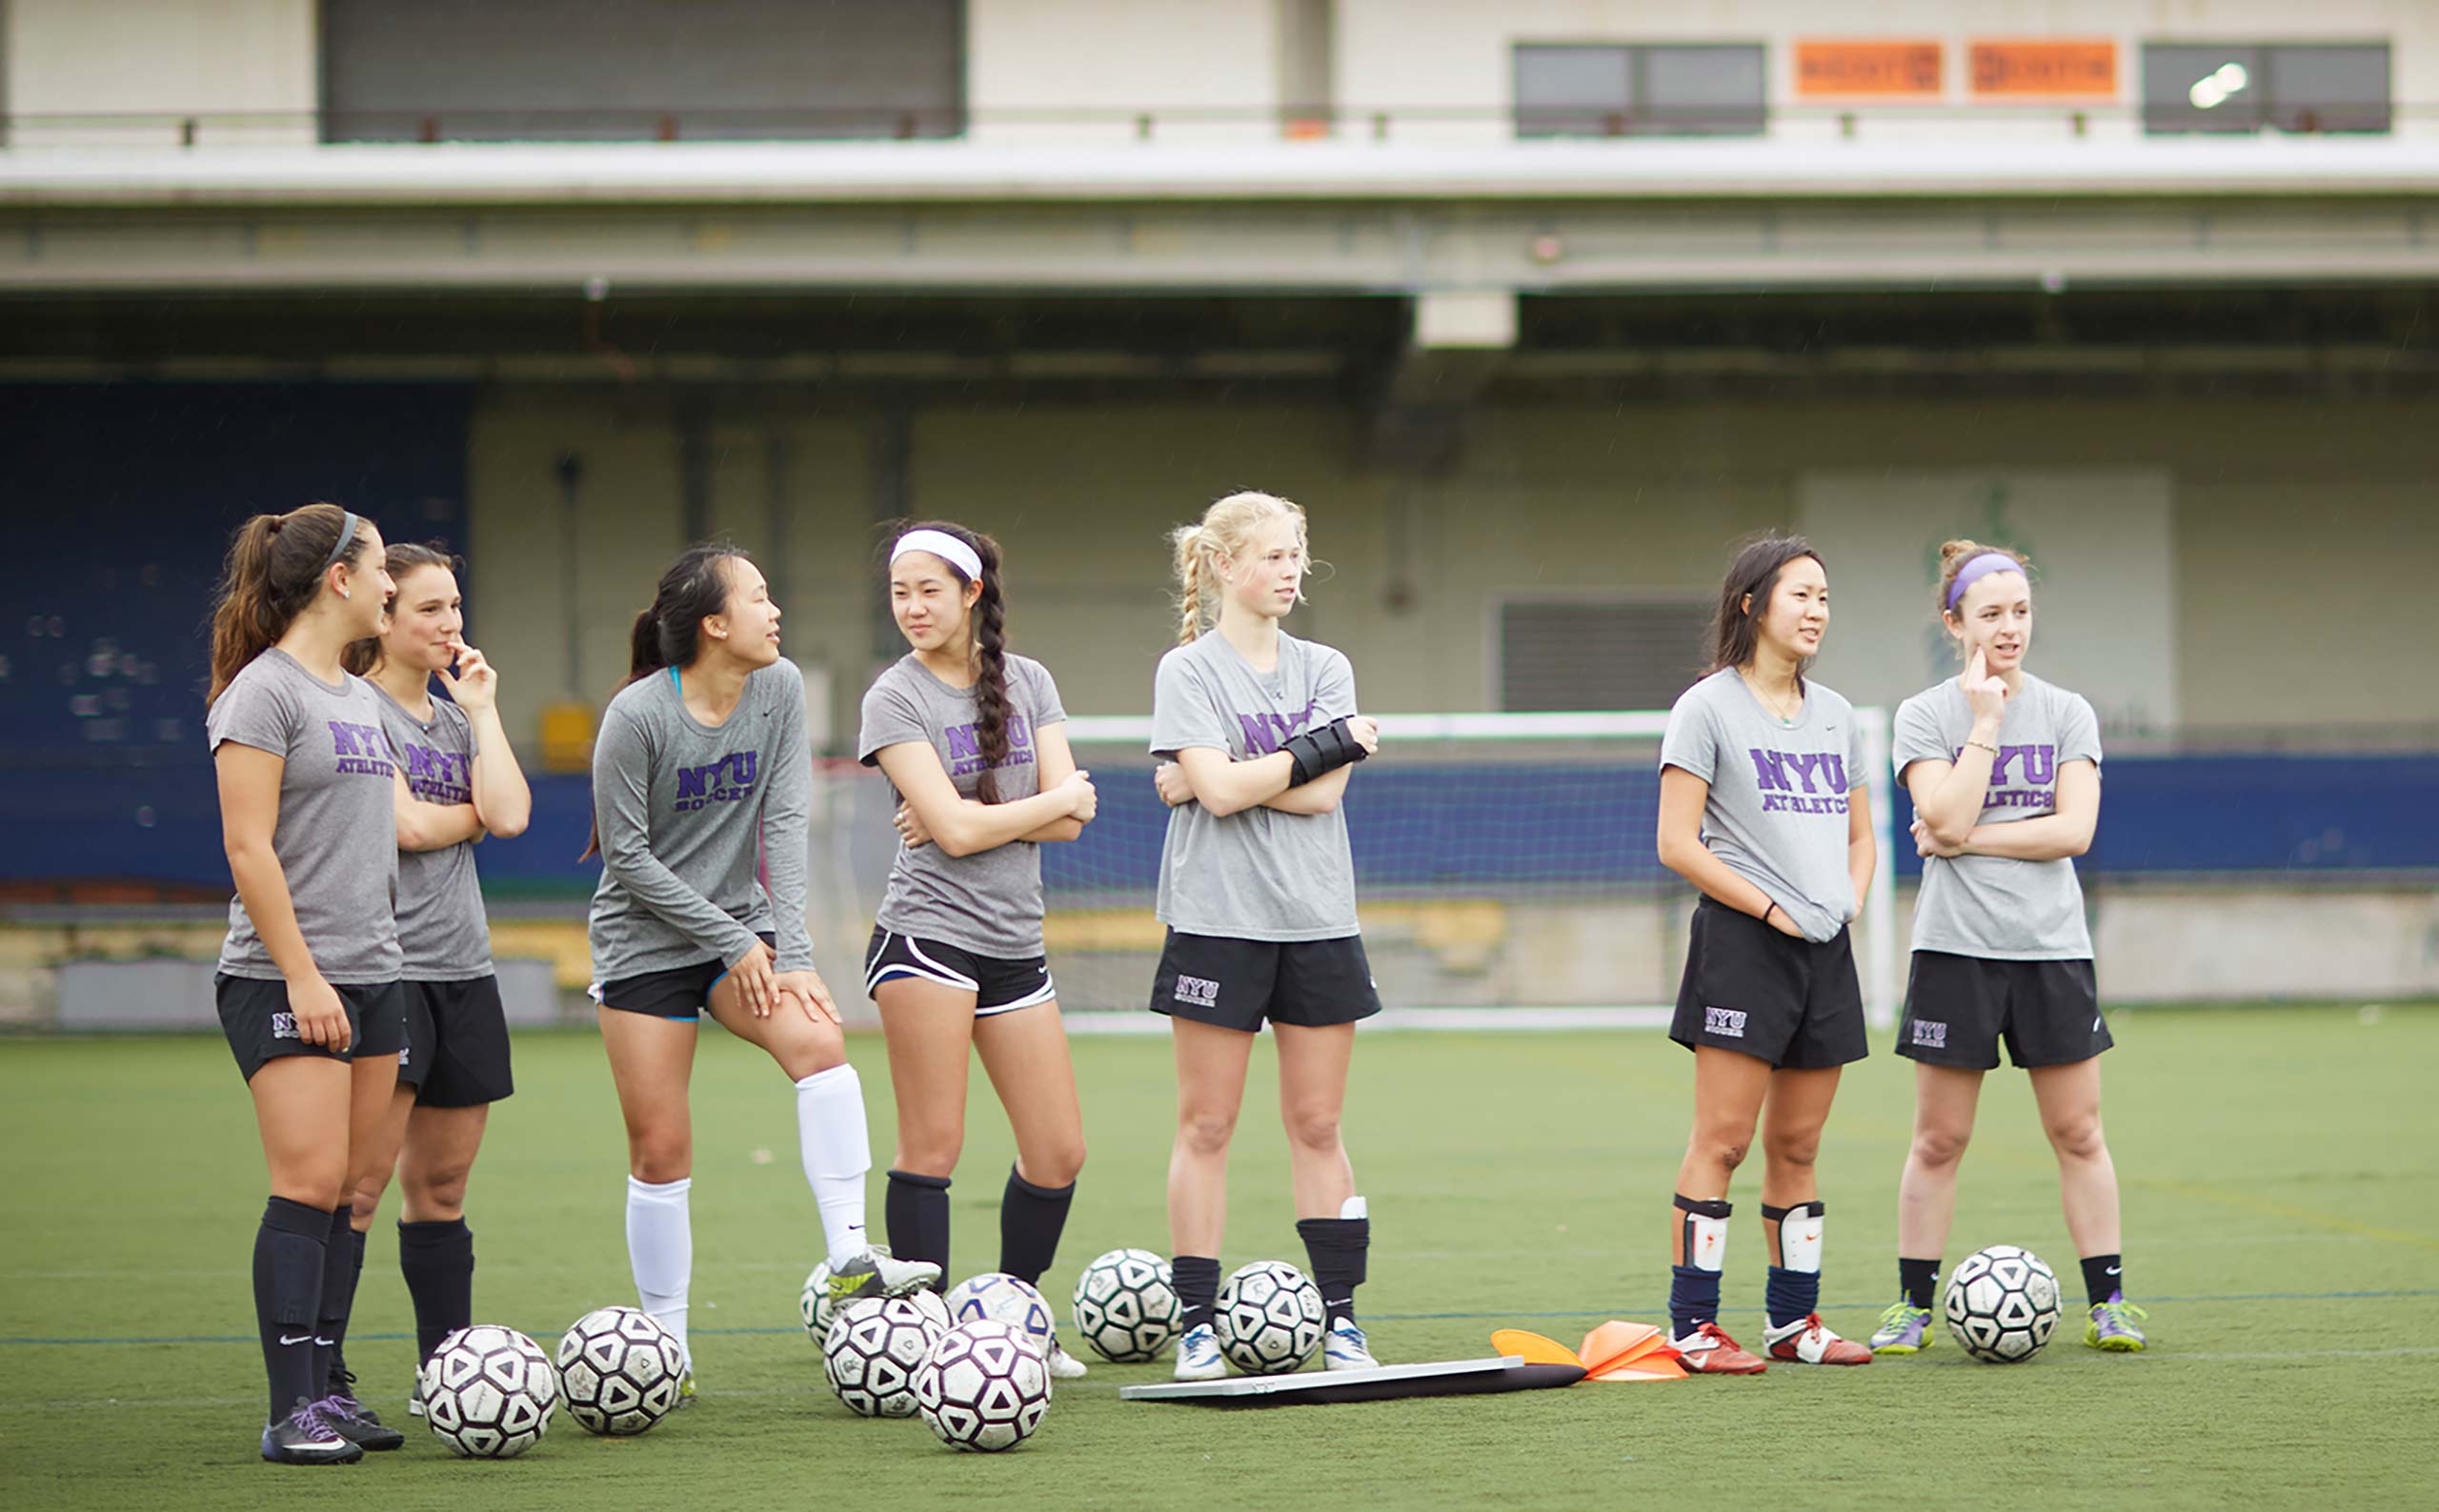 Women's soccer team at practice